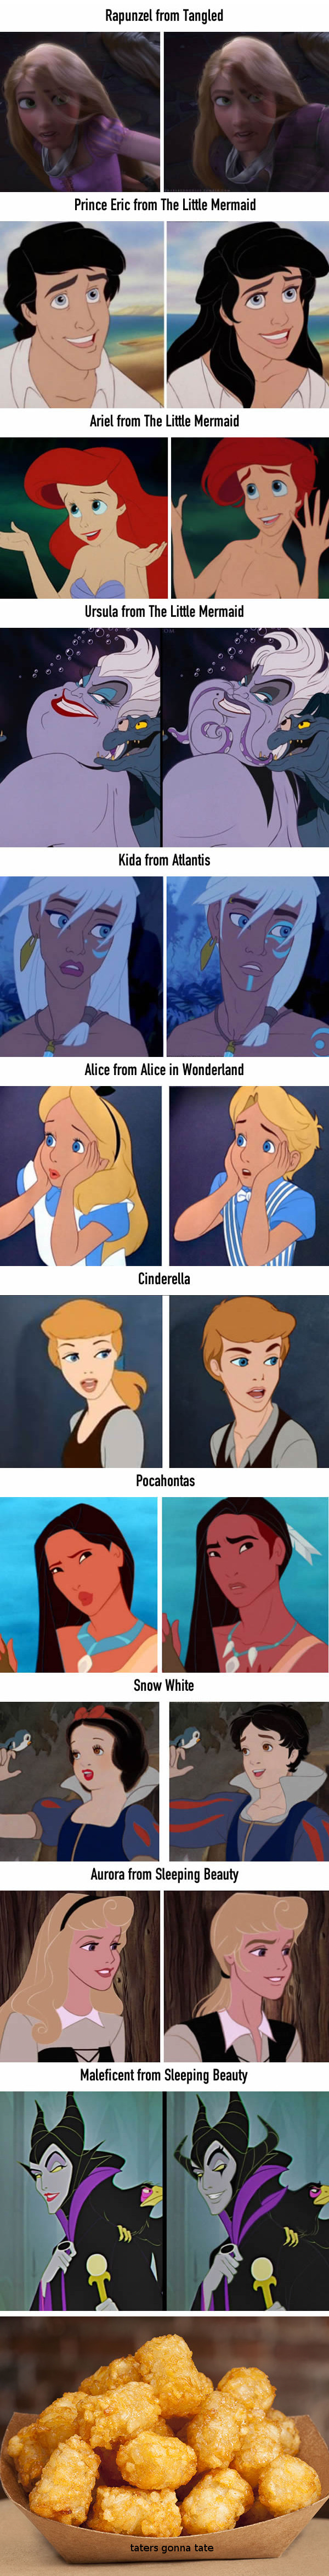 Gender bending with Disney.